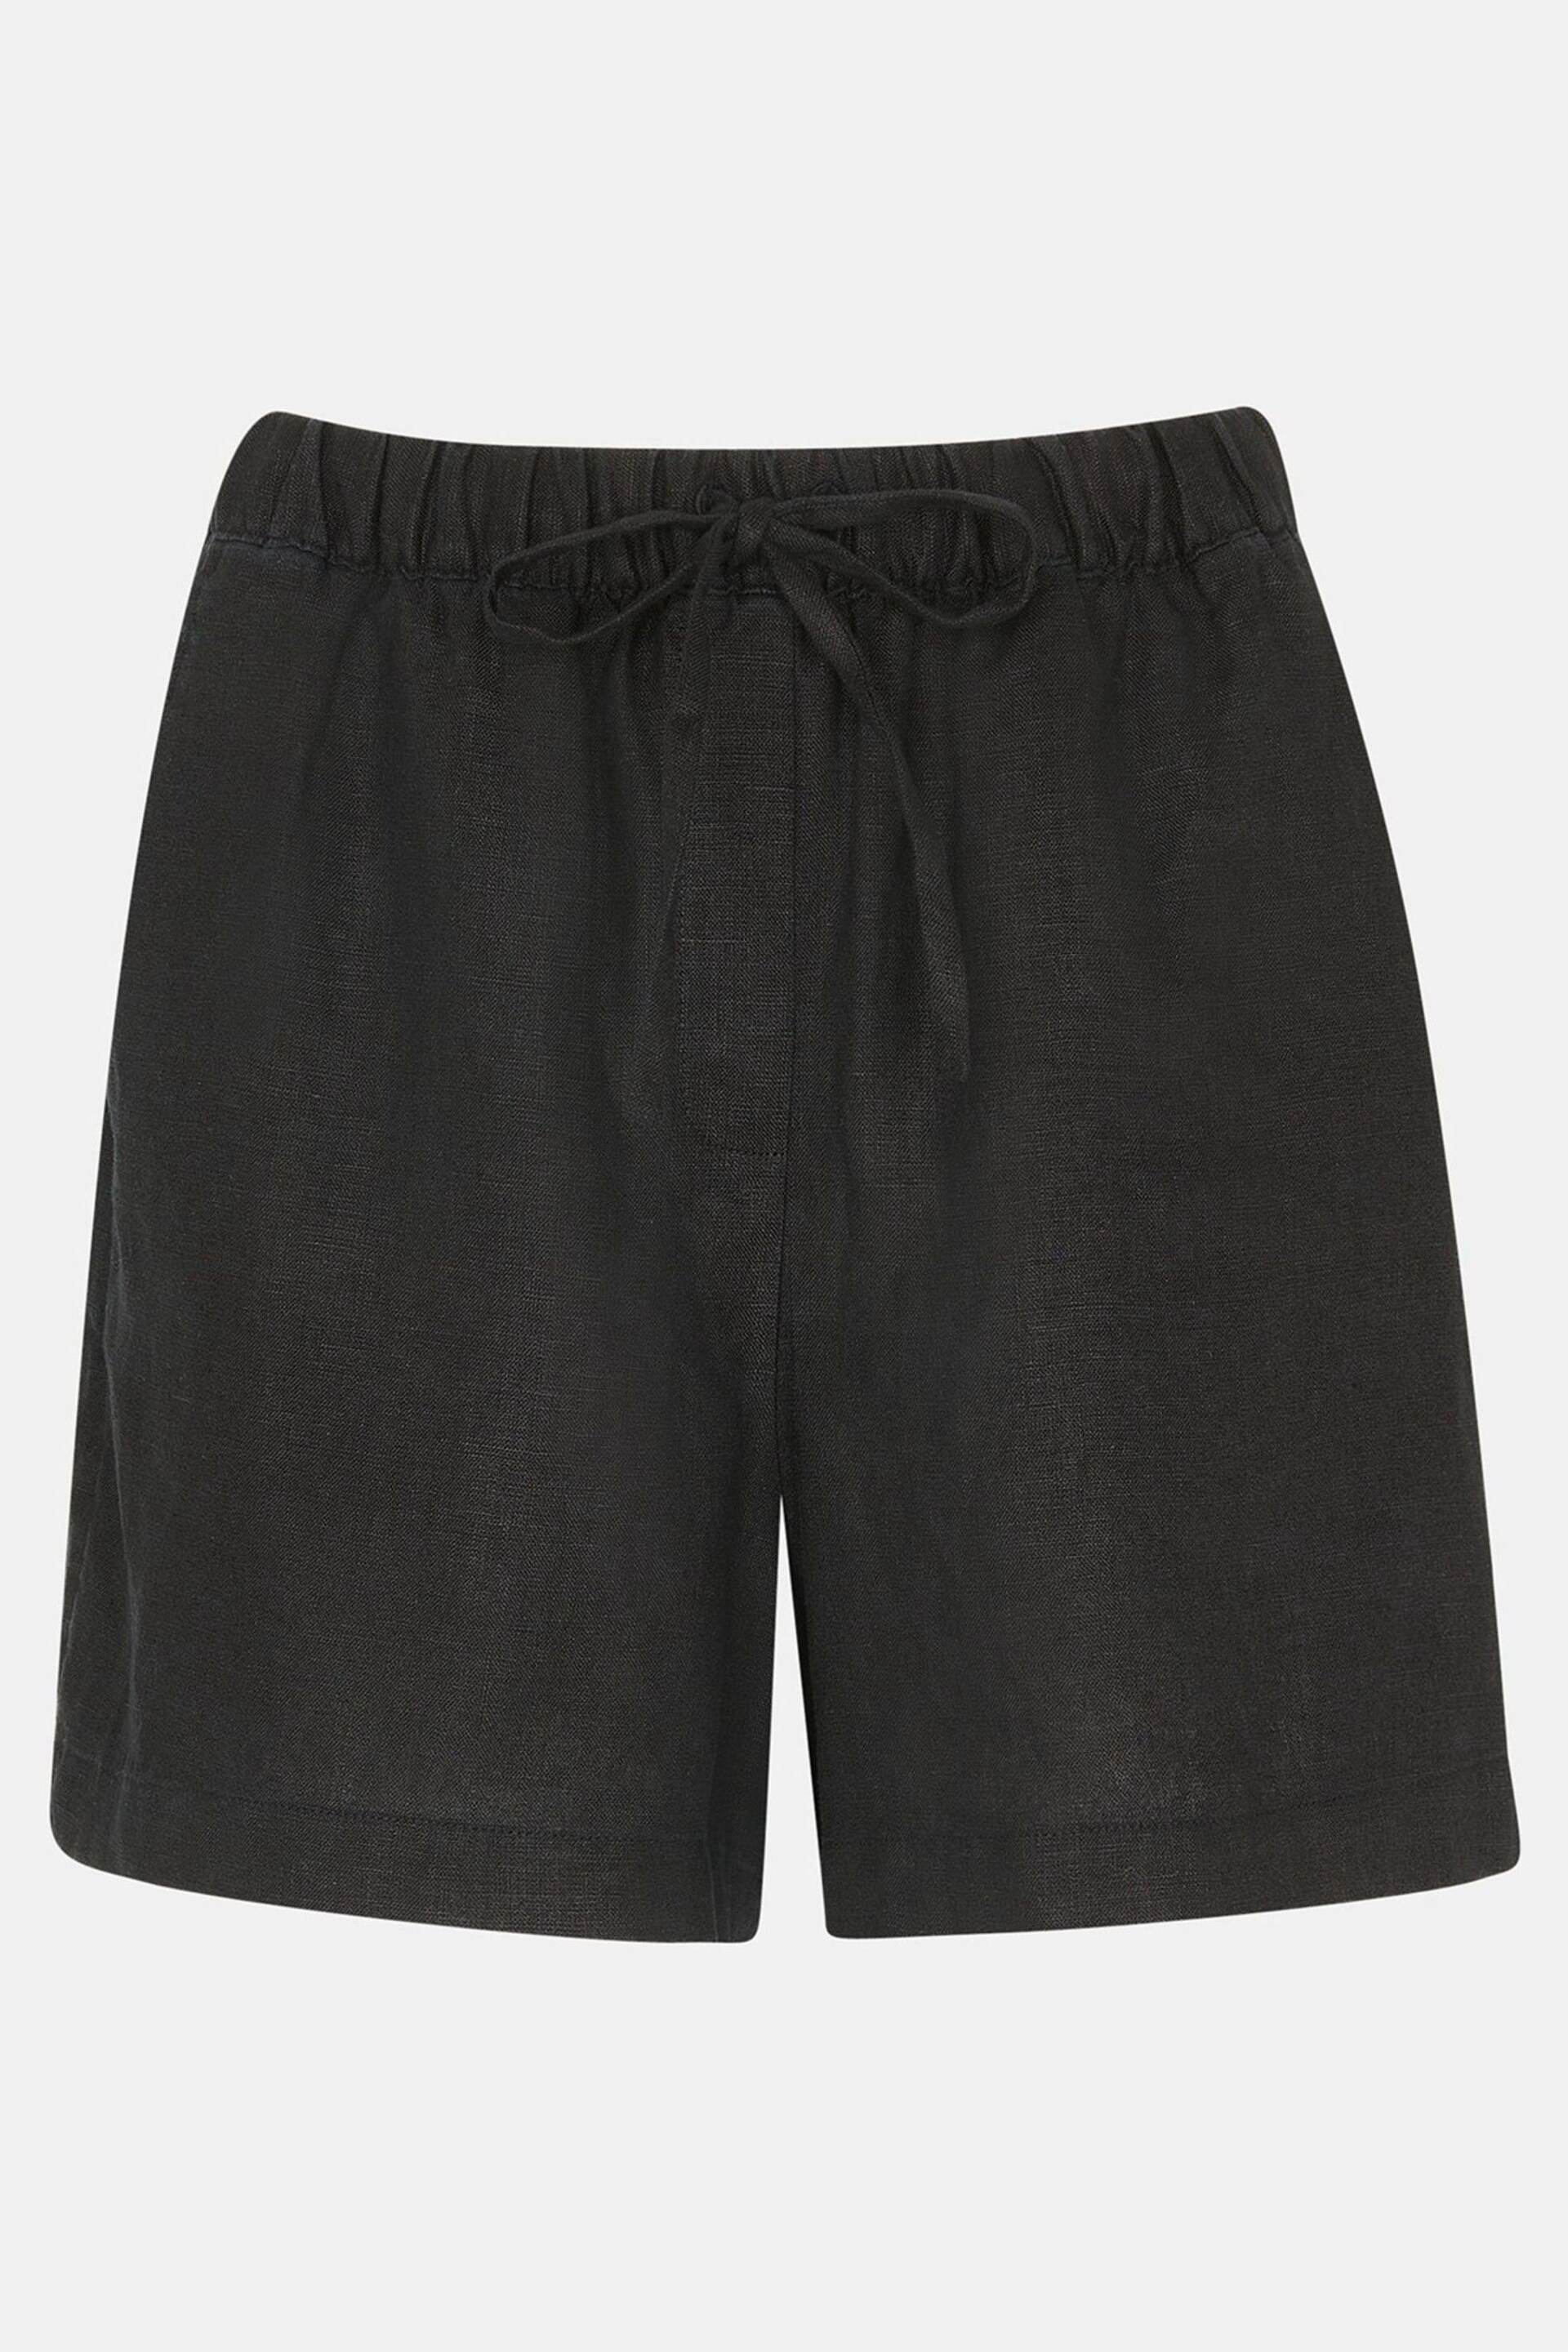 Whistles Petite Linen Elasticated Black Shorts - Image 5 of 5